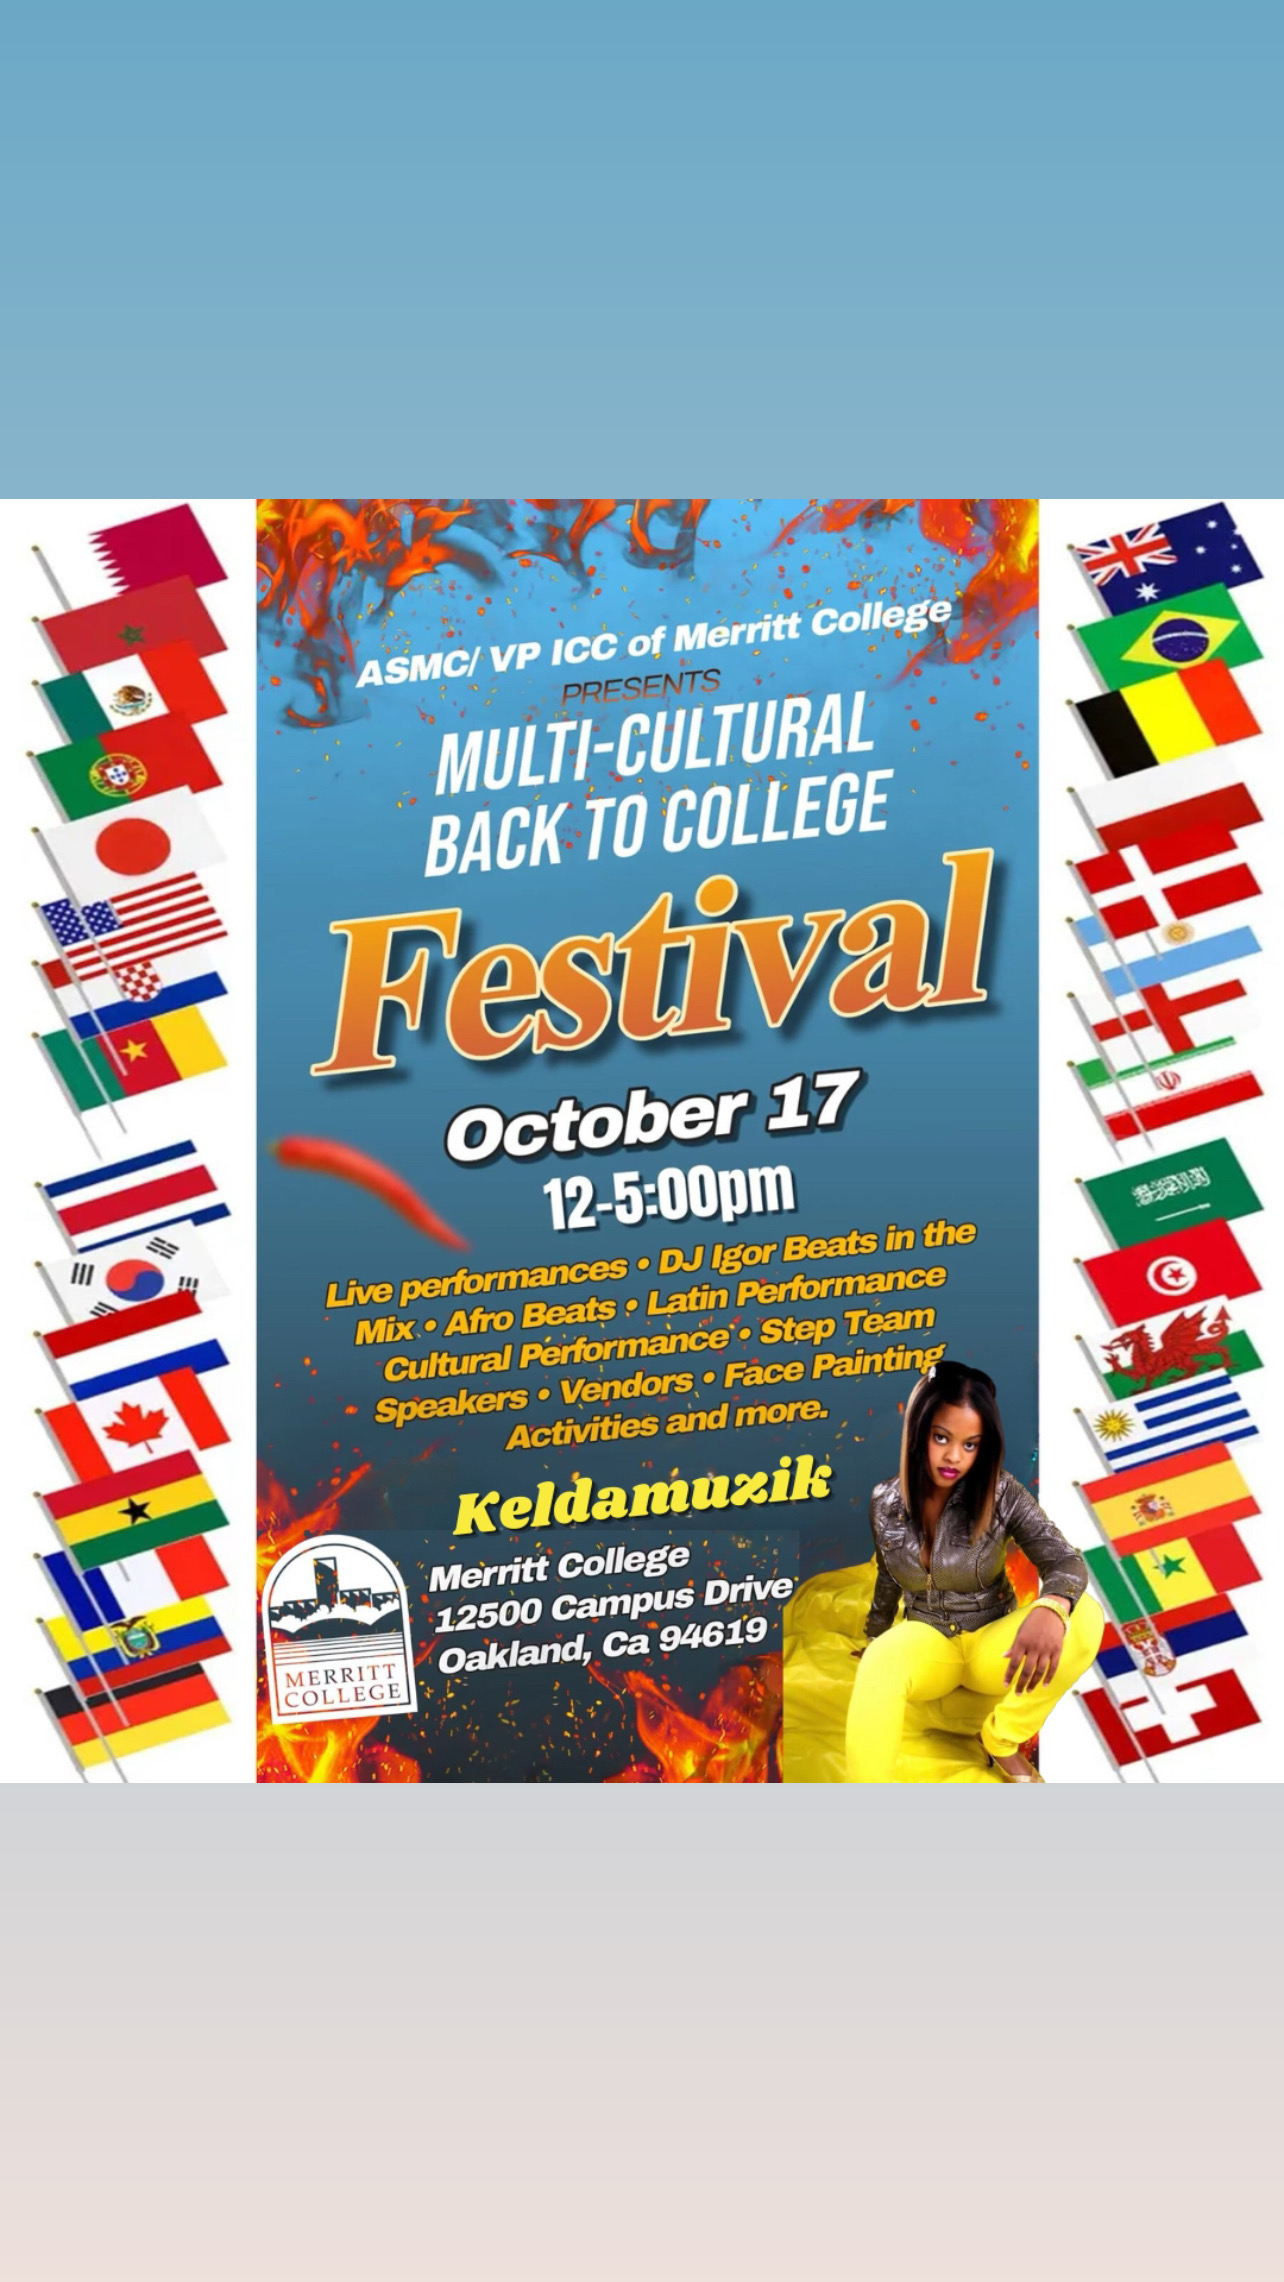 ASMC/VP ICC of Merritt College Presents Multi-Cultural Back To College Festival, Oakland, California, United States